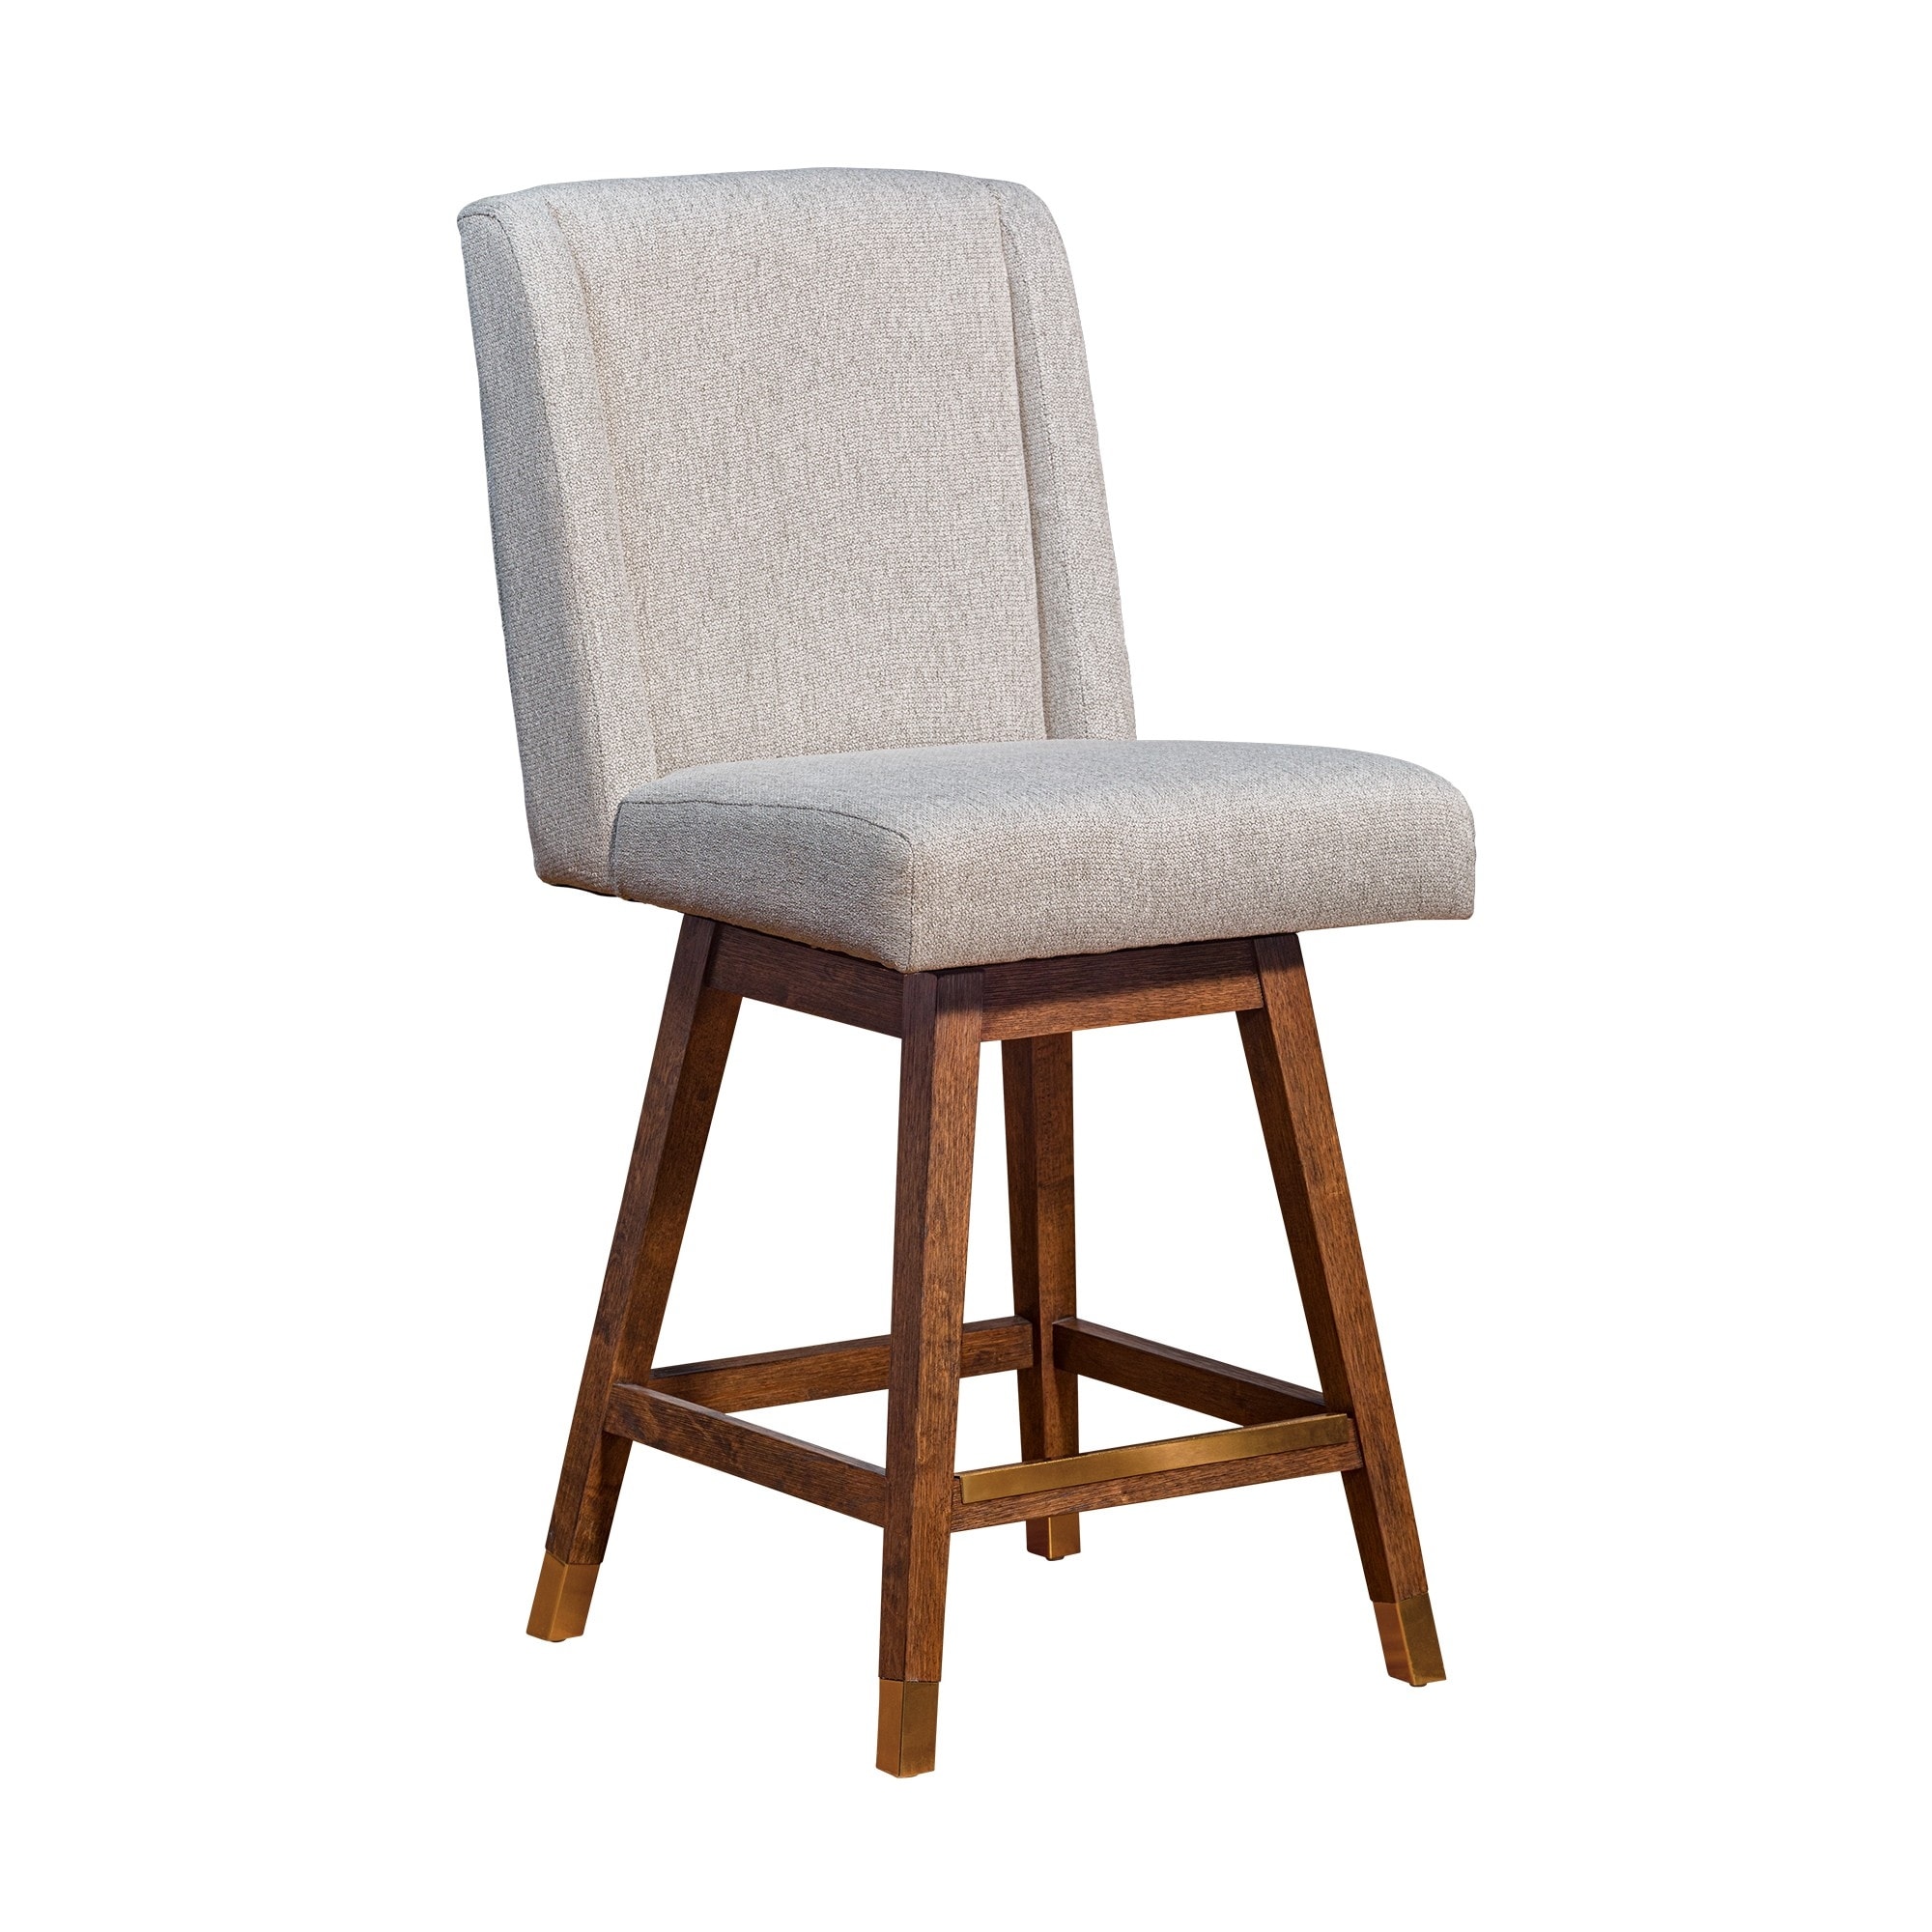 Benjara Rico 26 Inch Swivel Counter Stool Wingback Chair, Taupe Fabric, Brown Legs